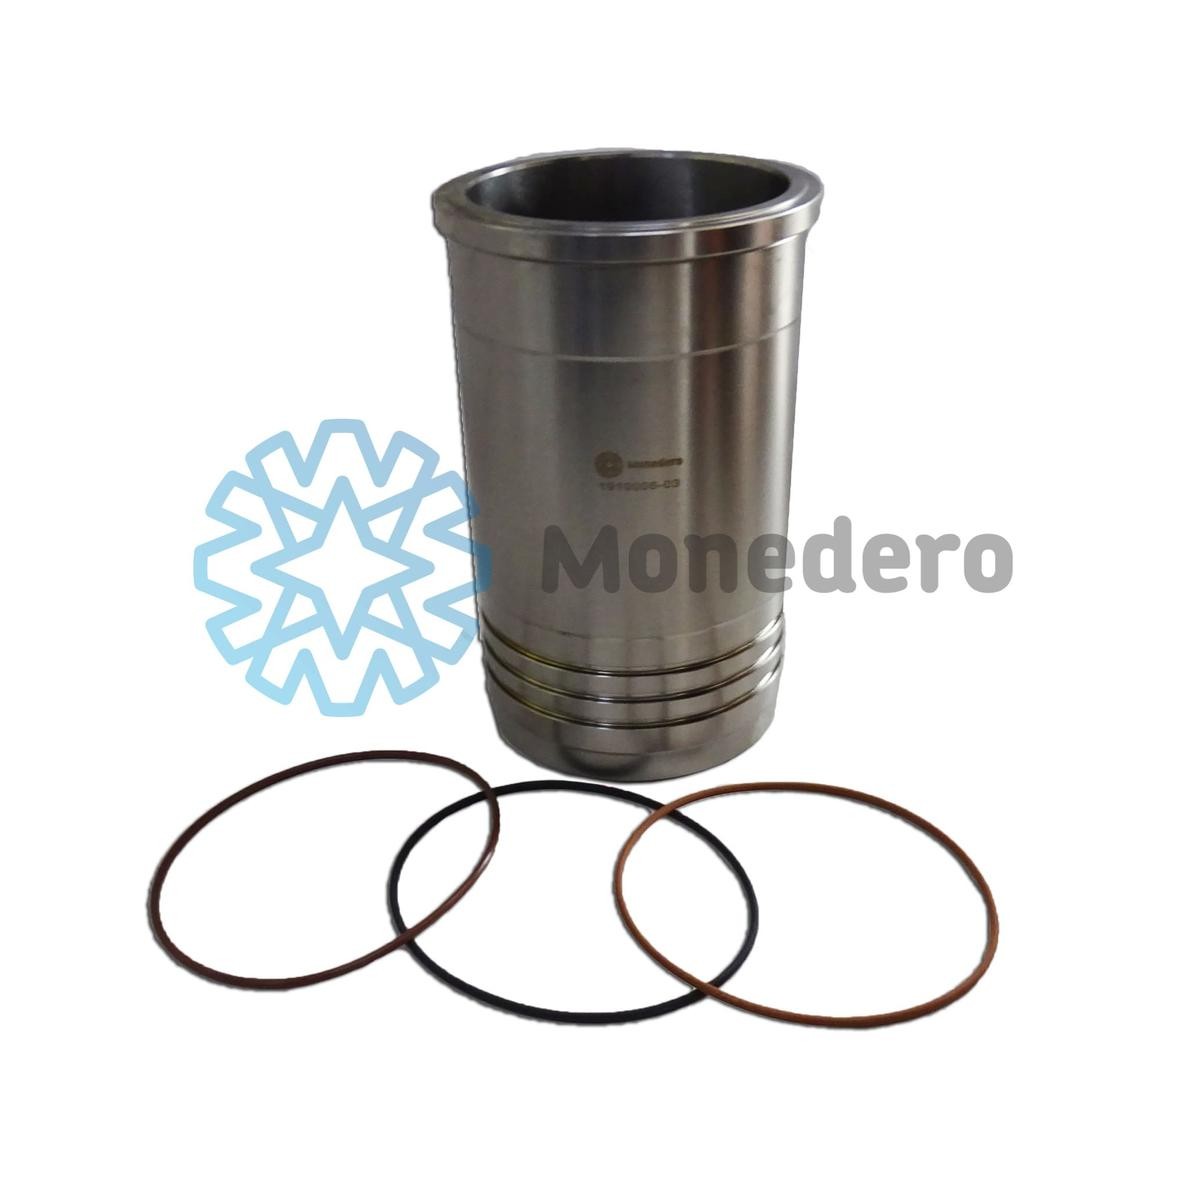 MONEDERO 30011300001 Cylinder Sleeve 500054921